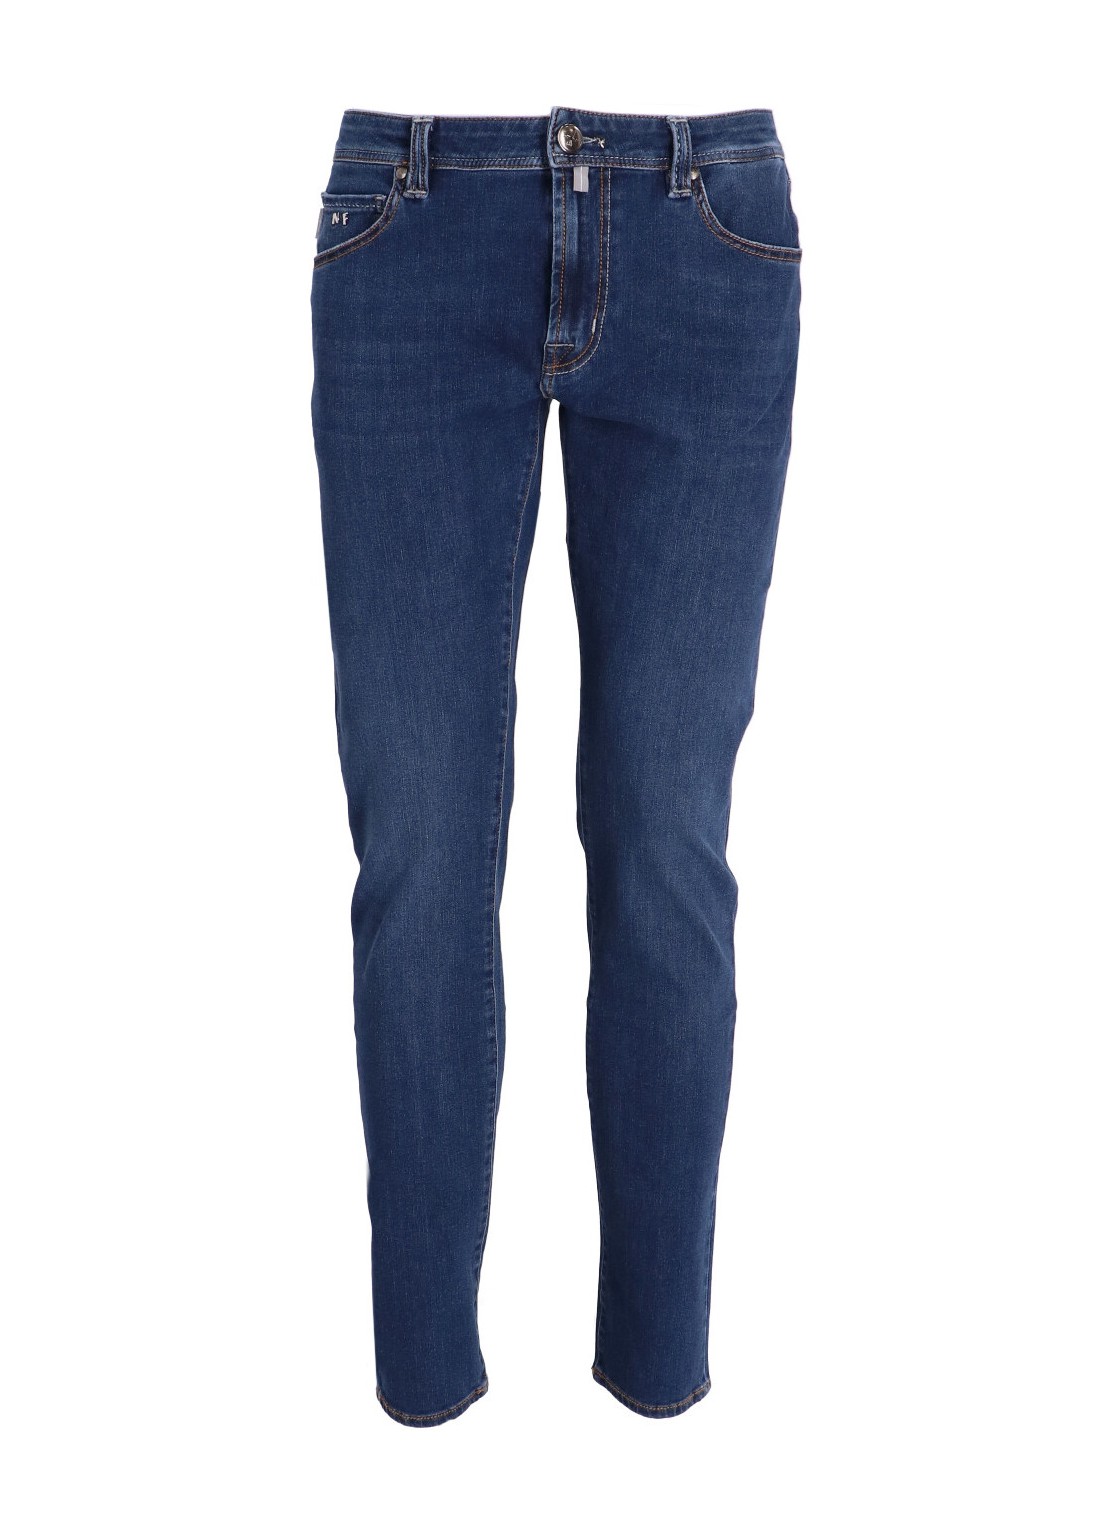 Pantalon jeans tramarossa denim man leonardo zip stre leonardo zip stre 23i20 talla 36
 